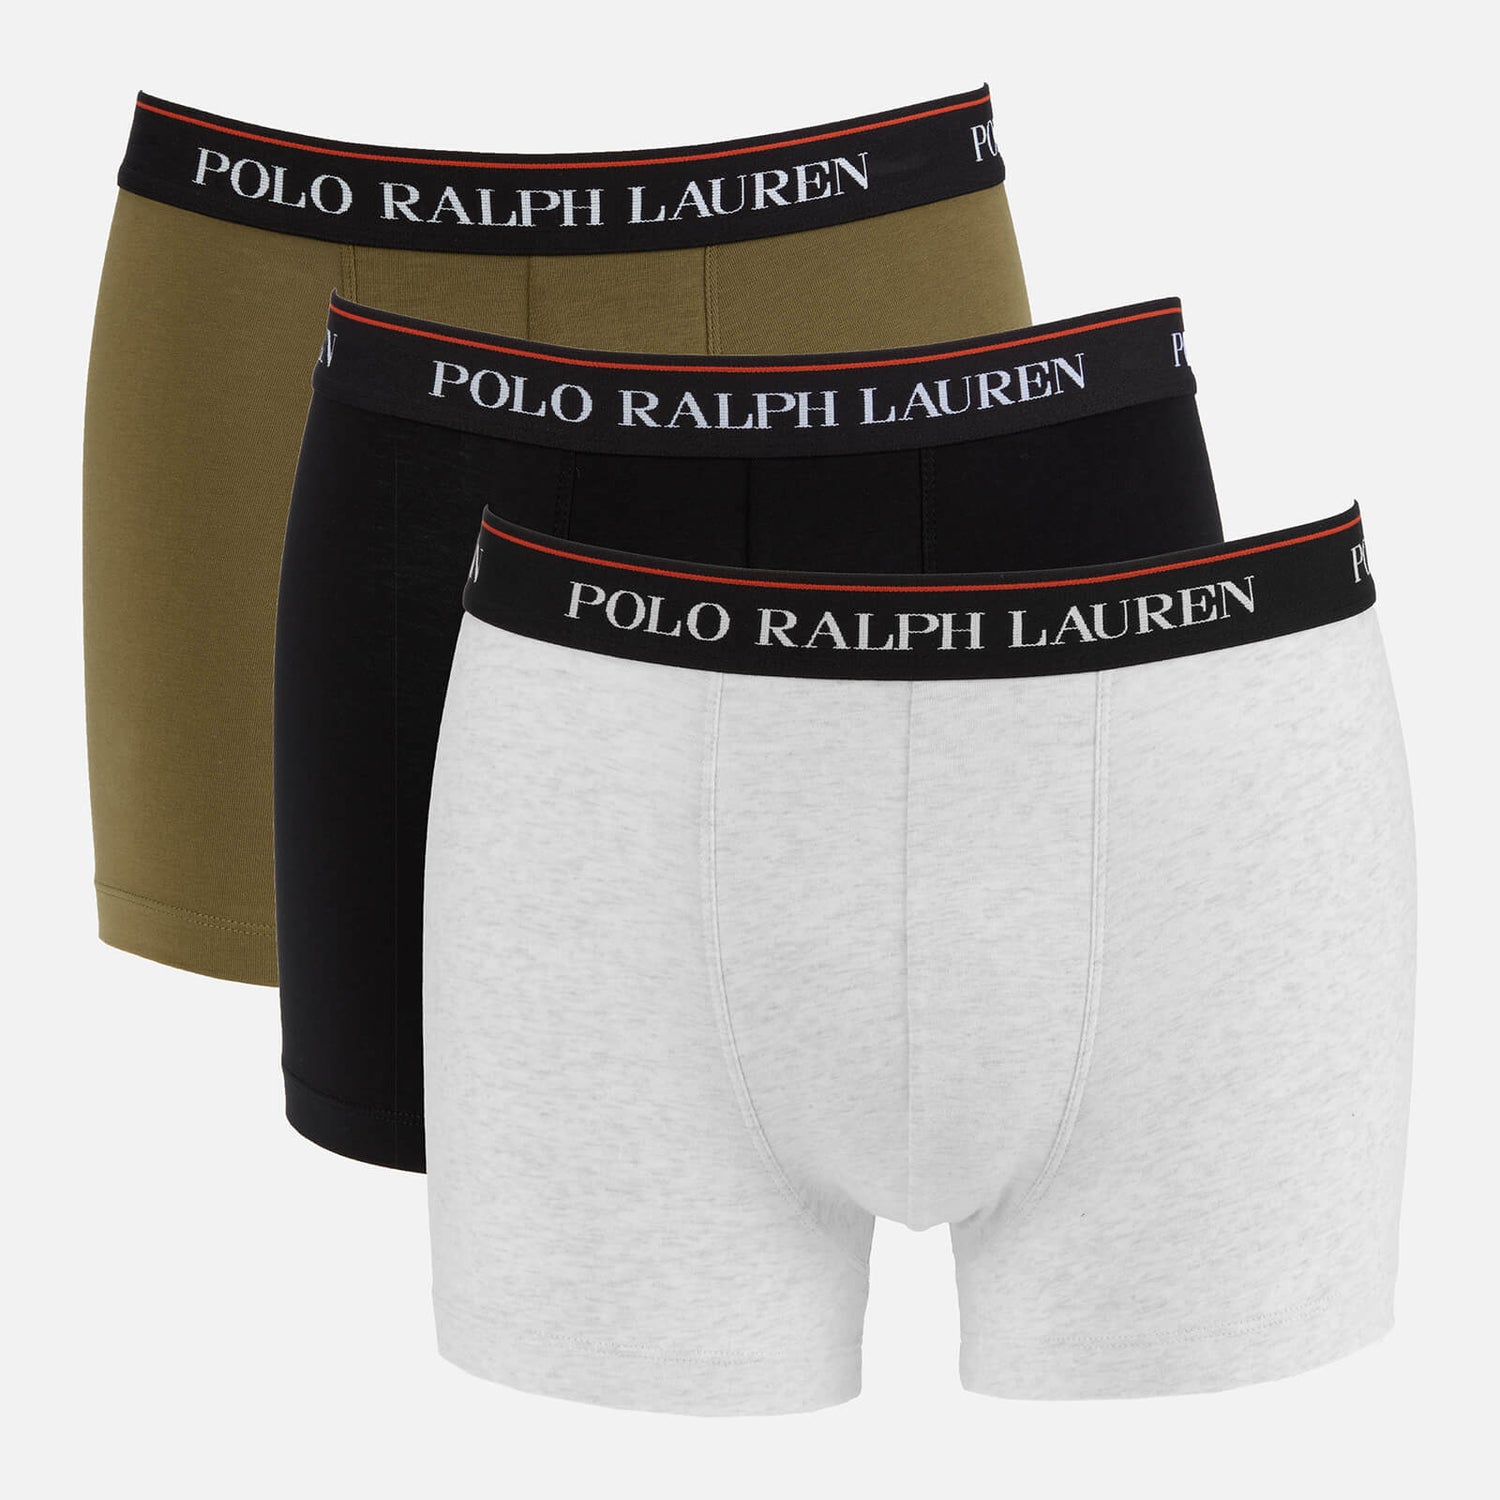 Polo Ralph Lauren Men's 3-Pack Classic Trunk Boxer Shorts - Black/Oatmeal/Olive